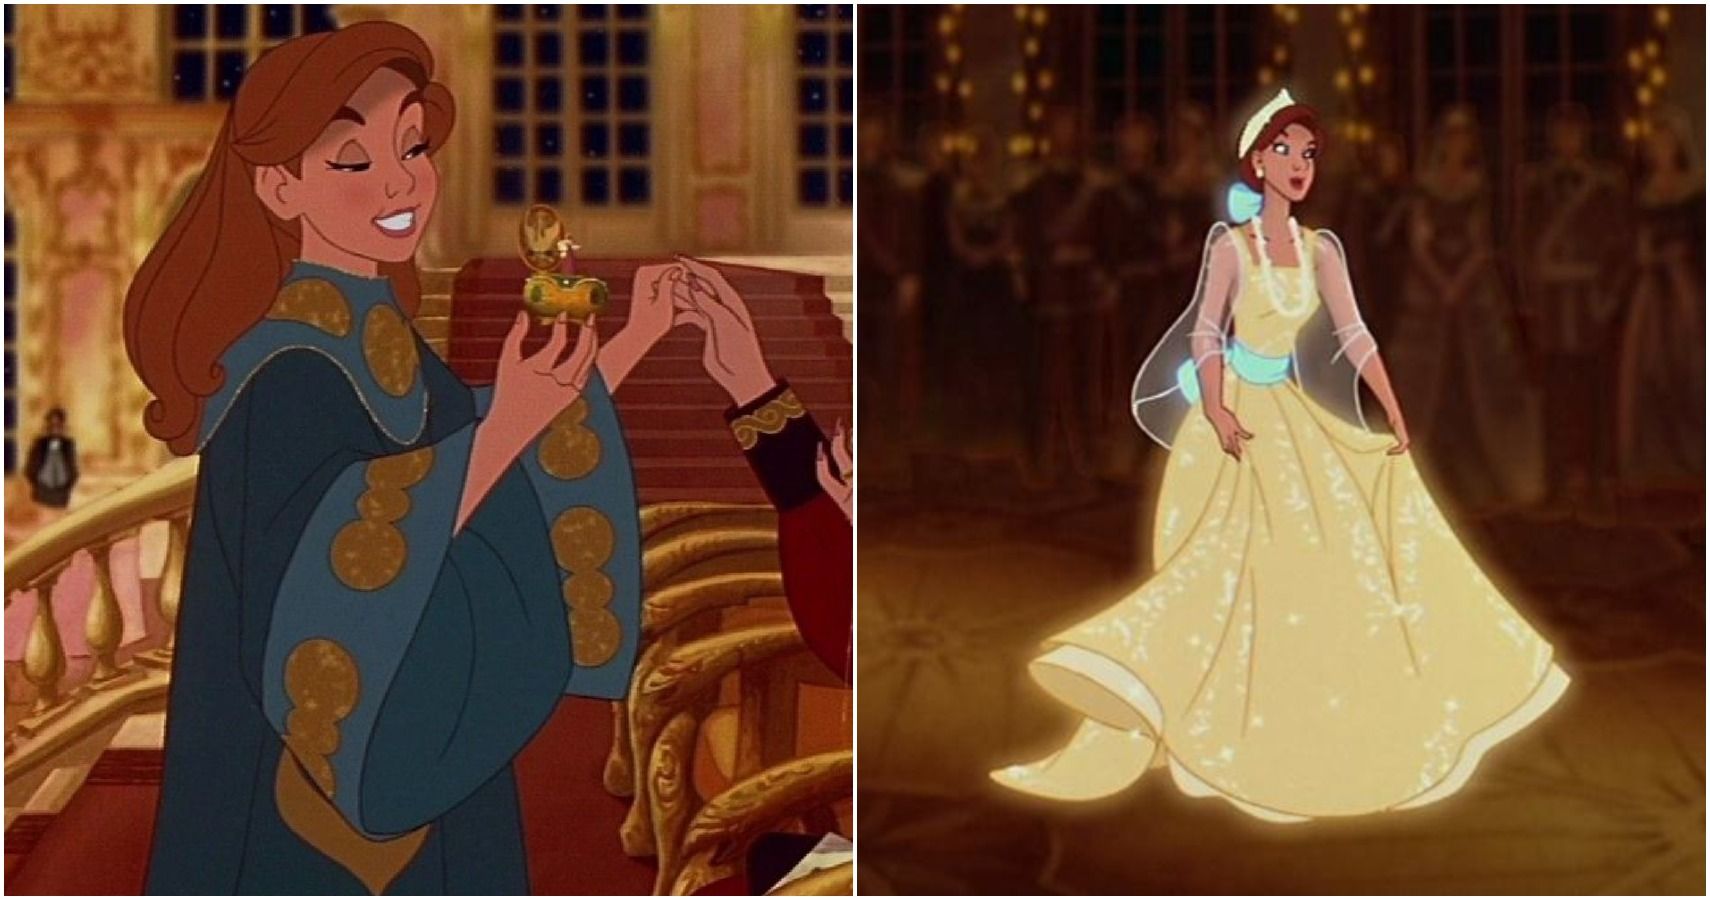 Disneys Anastasia’s 10 Best Looks Ranked